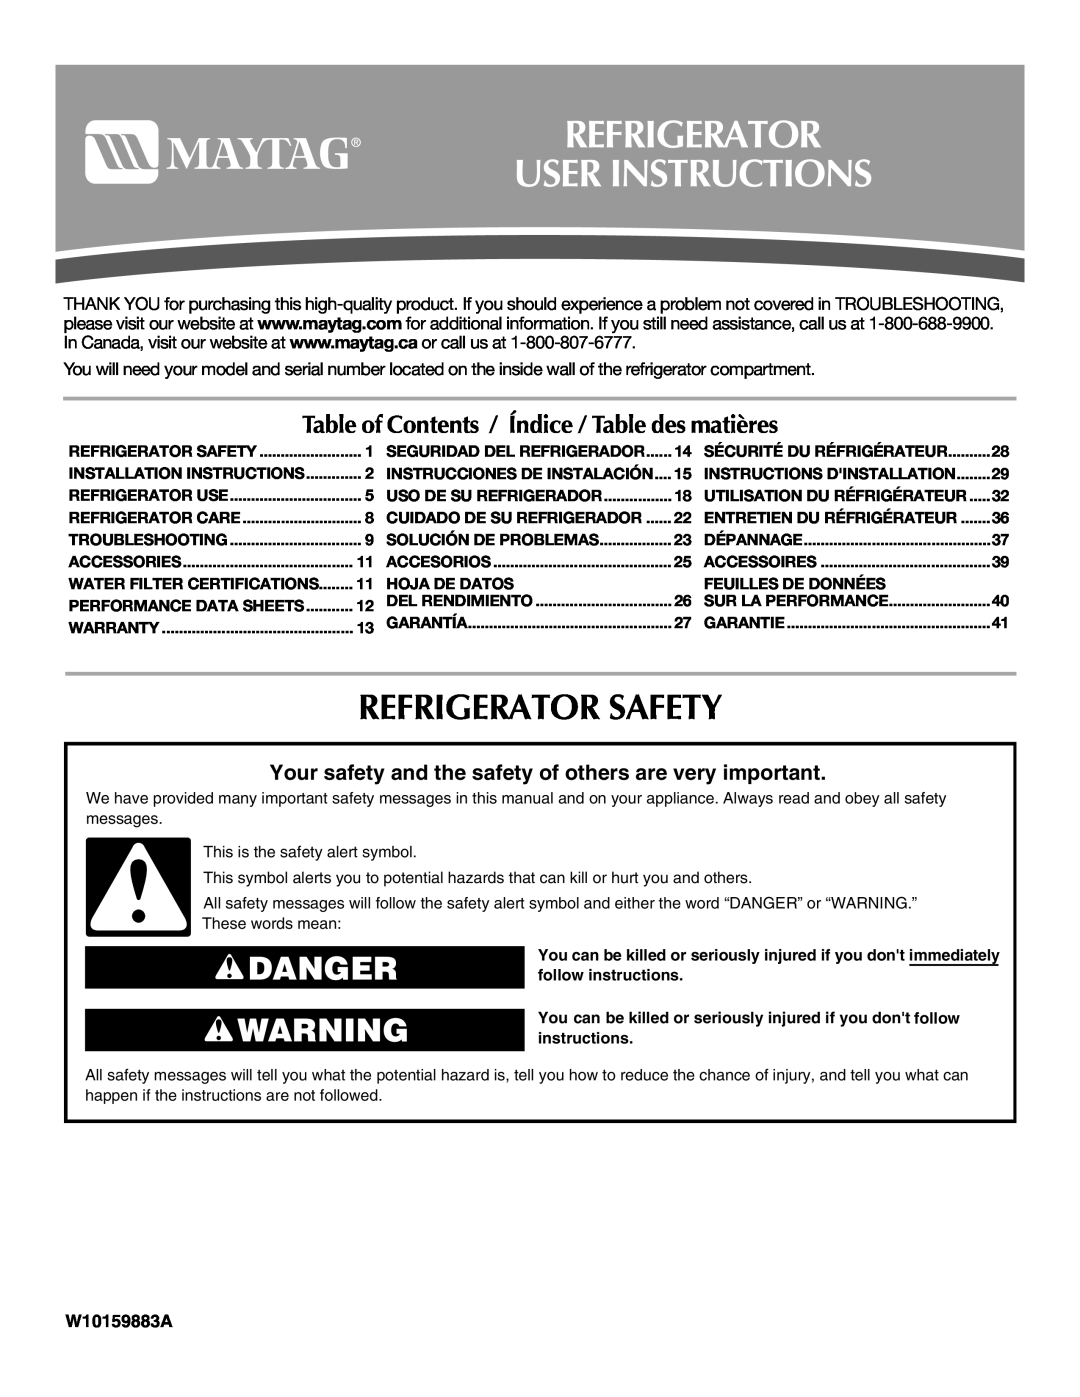 Maytag MSD2254VEW installation instructions Refrigerator User Instructions, Refrigerator Safety, Danger, W10159883A 